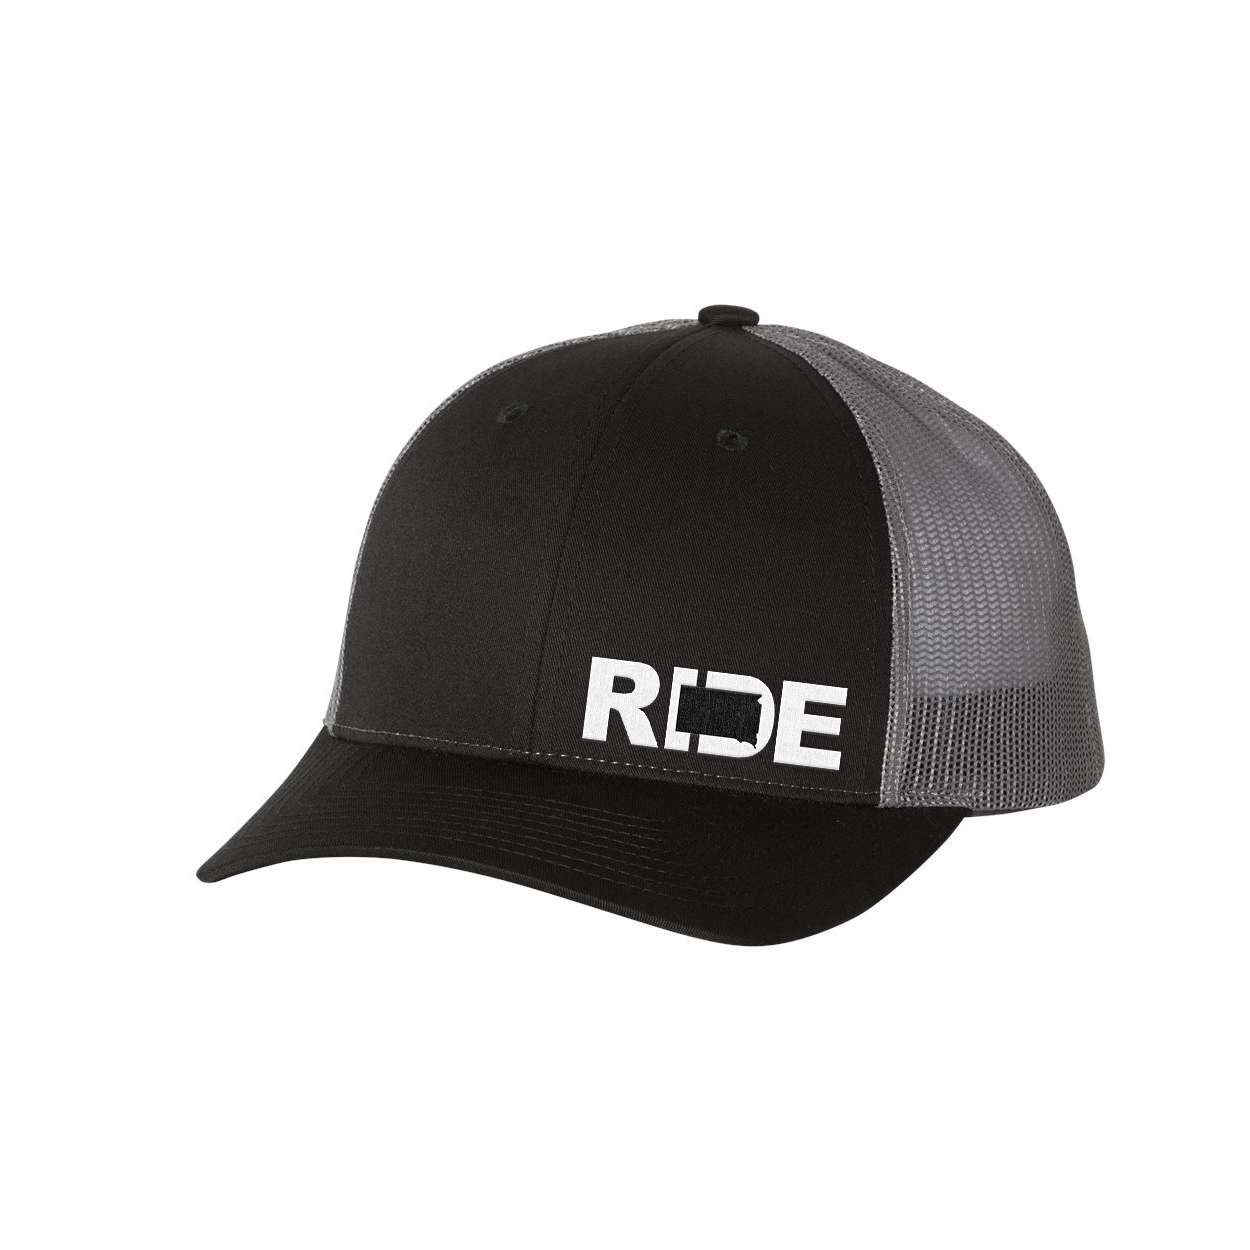 Ride South Dakota Night Out Embroidered Snapback Trucker Hat Black/Gray